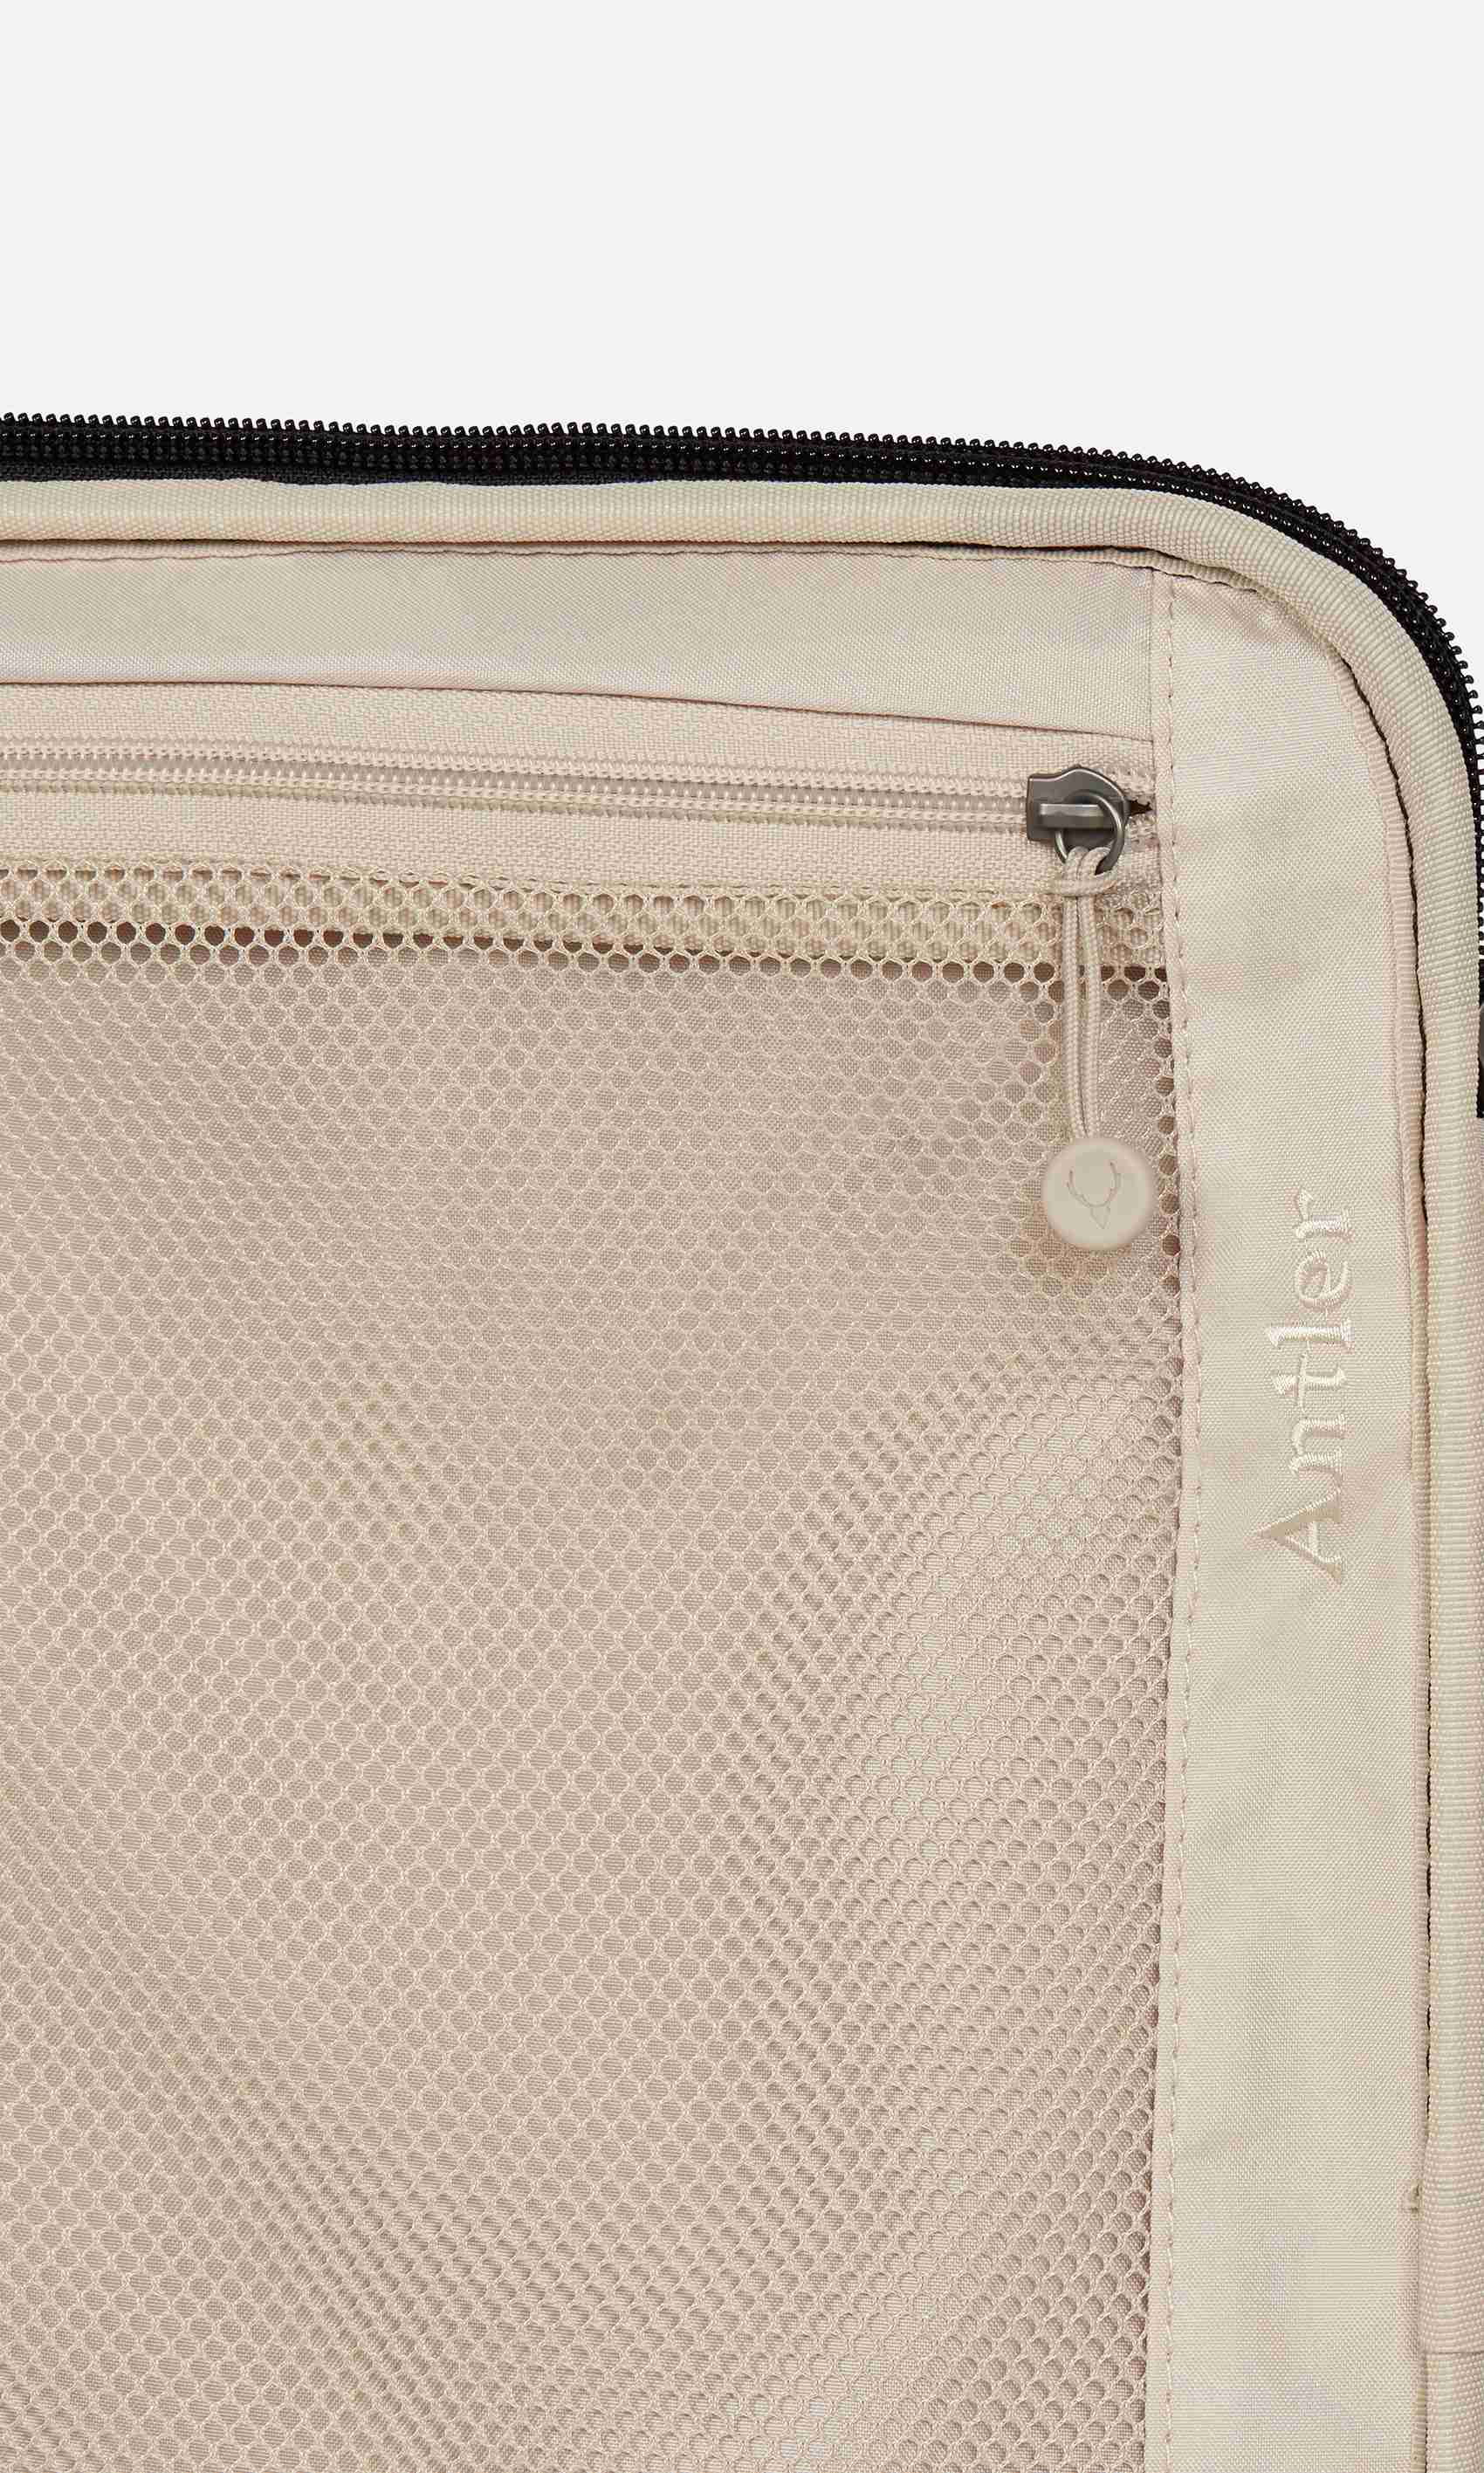 Antler Luggage -  Brixham cabin in black - Soft Suitcases Brixham Cabin Suitcase Black | Soft Shell Suitcase | Antler UK